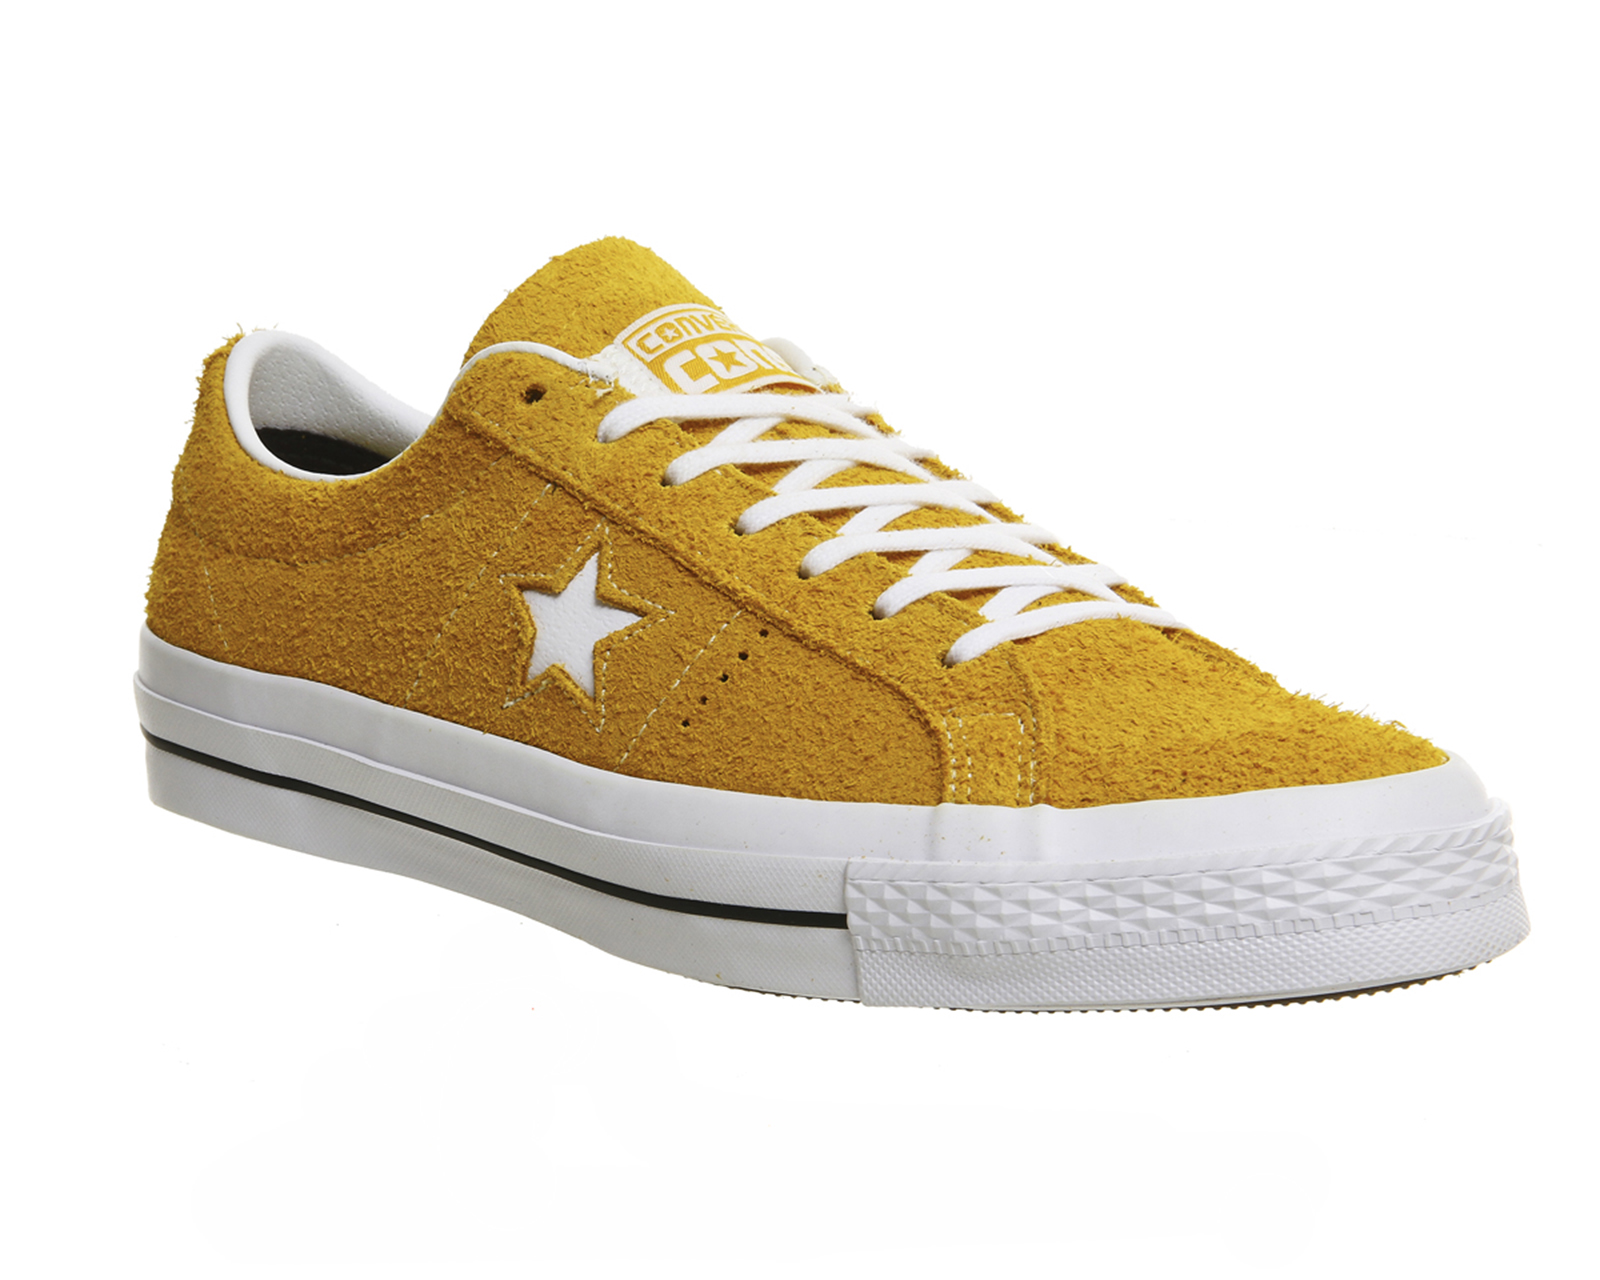 Converse One Star Skate Yellow White Gum Hairy Suede - Junior